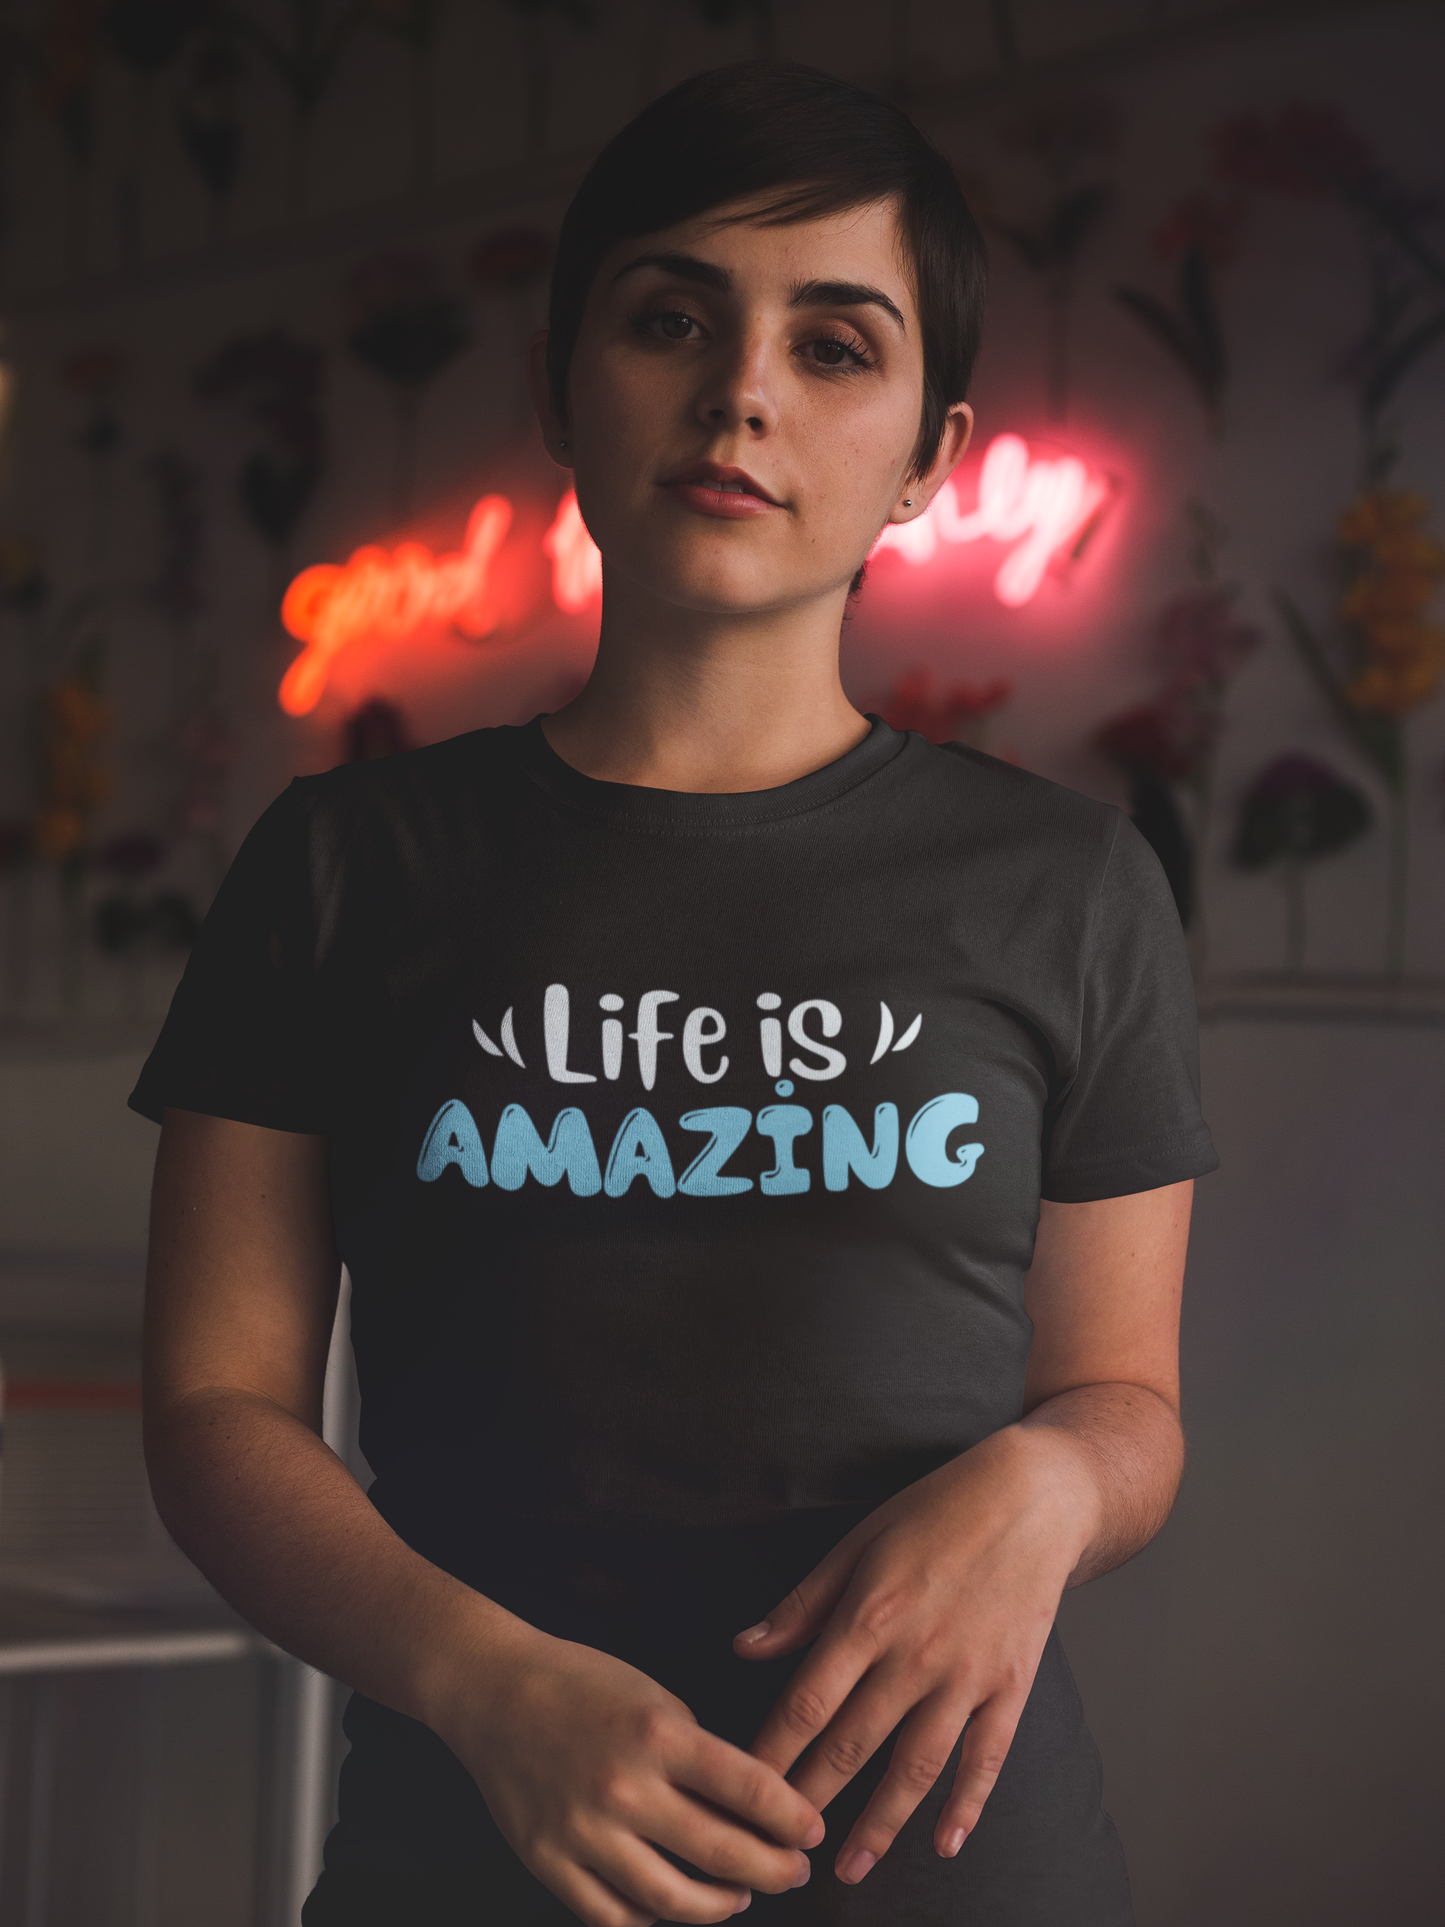 Life is Amazing Women's Premium Tee, Amazing shirts, Inspirational shirts, Motivational Shirts, Positive shirts, Trendy tees